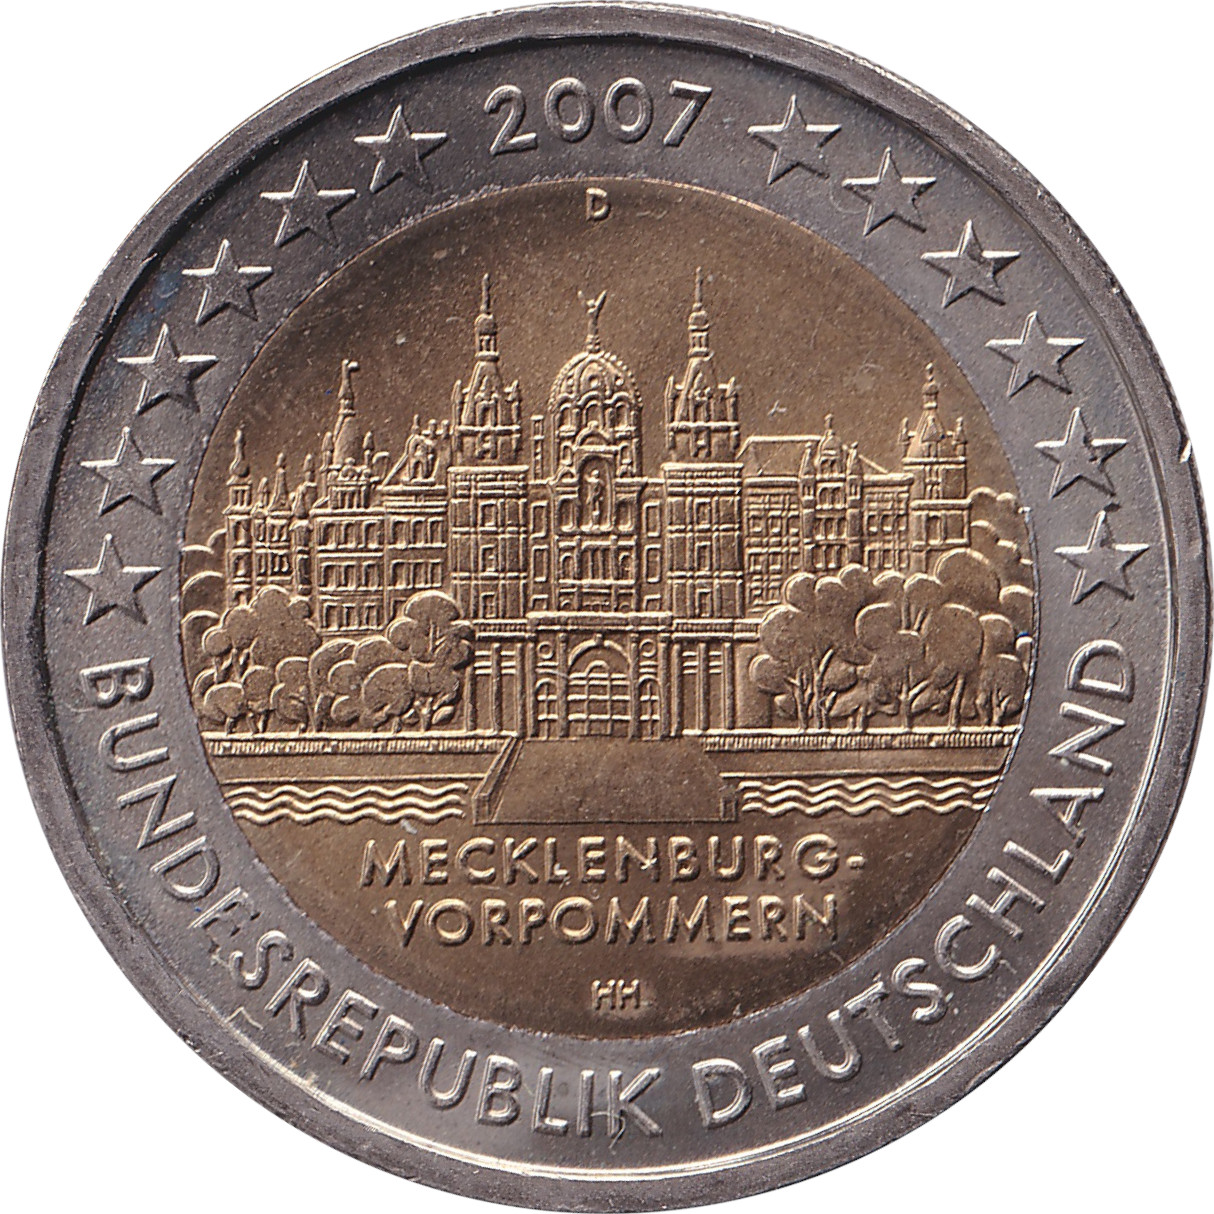 2 euro - Mecklemburg-Pomerania